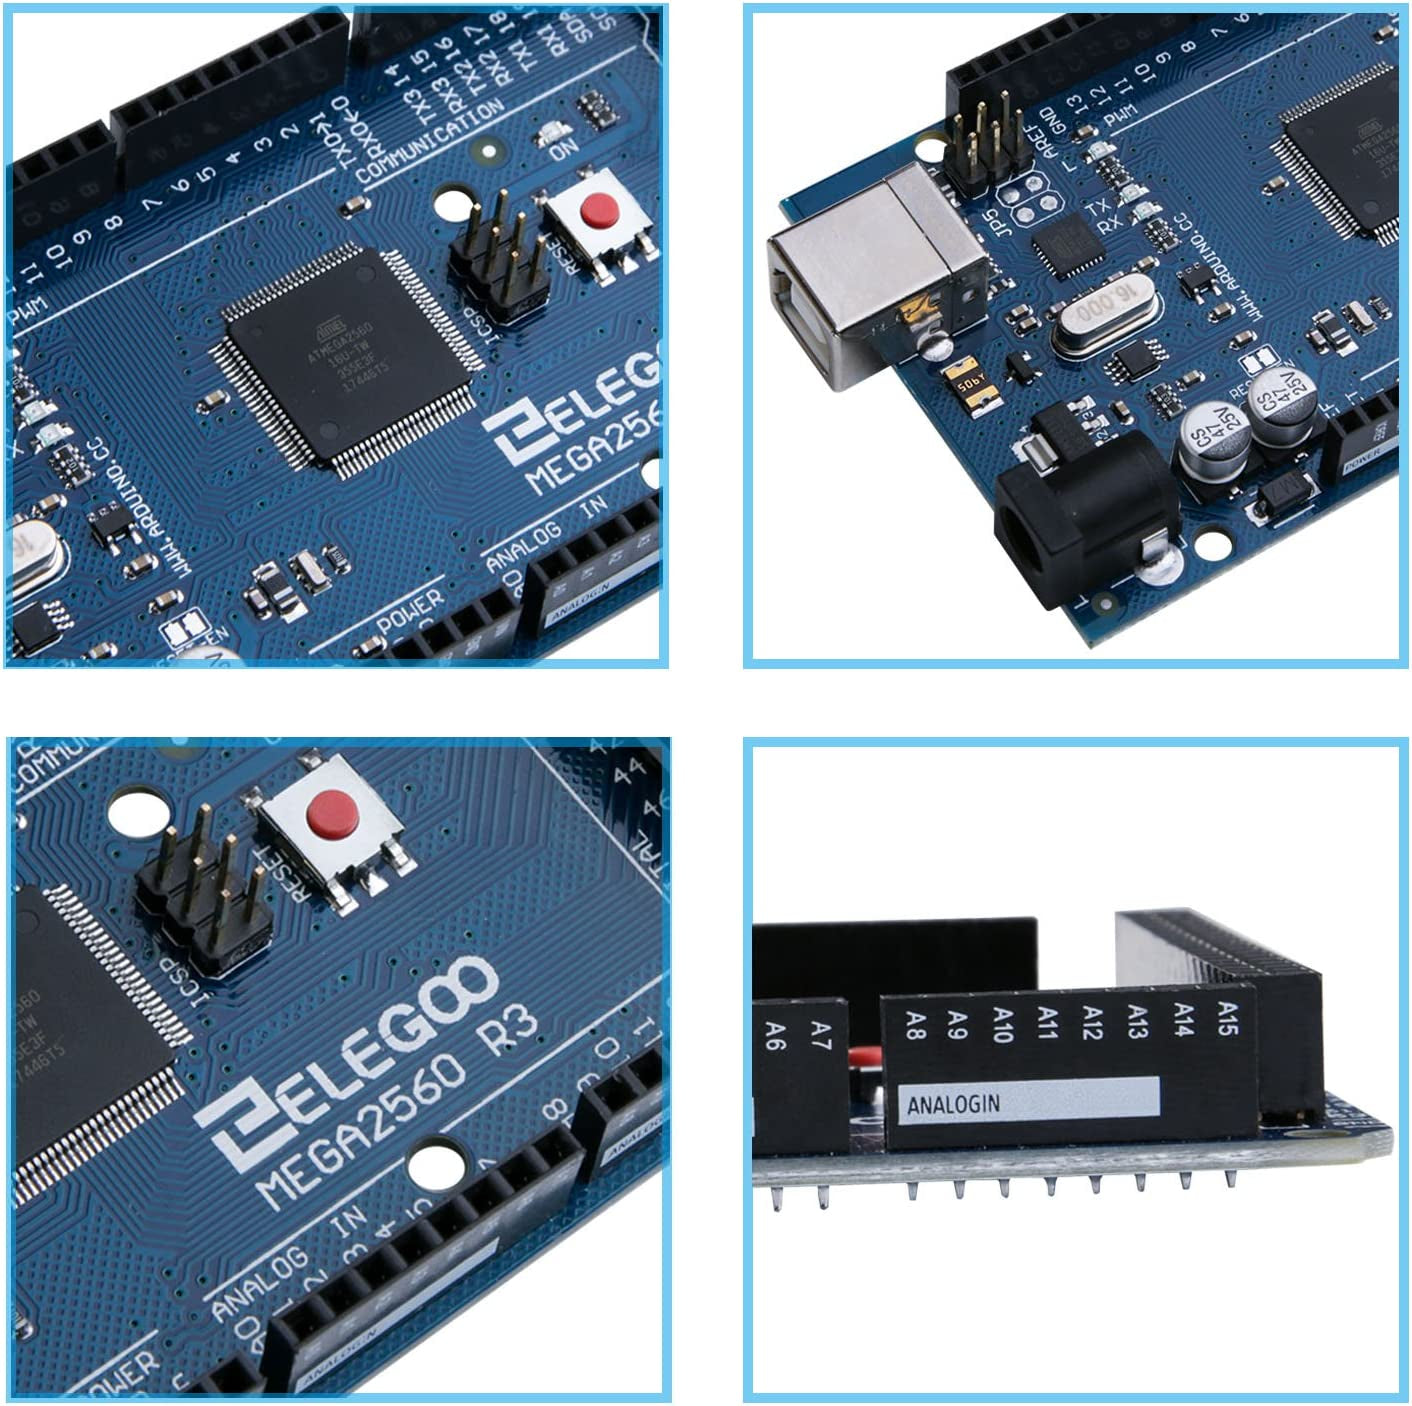 ELEGOO MEGA R3 Board Atmega 2560 + USB Cable Compatible with Arduino IDE Projects Rohs Compliant